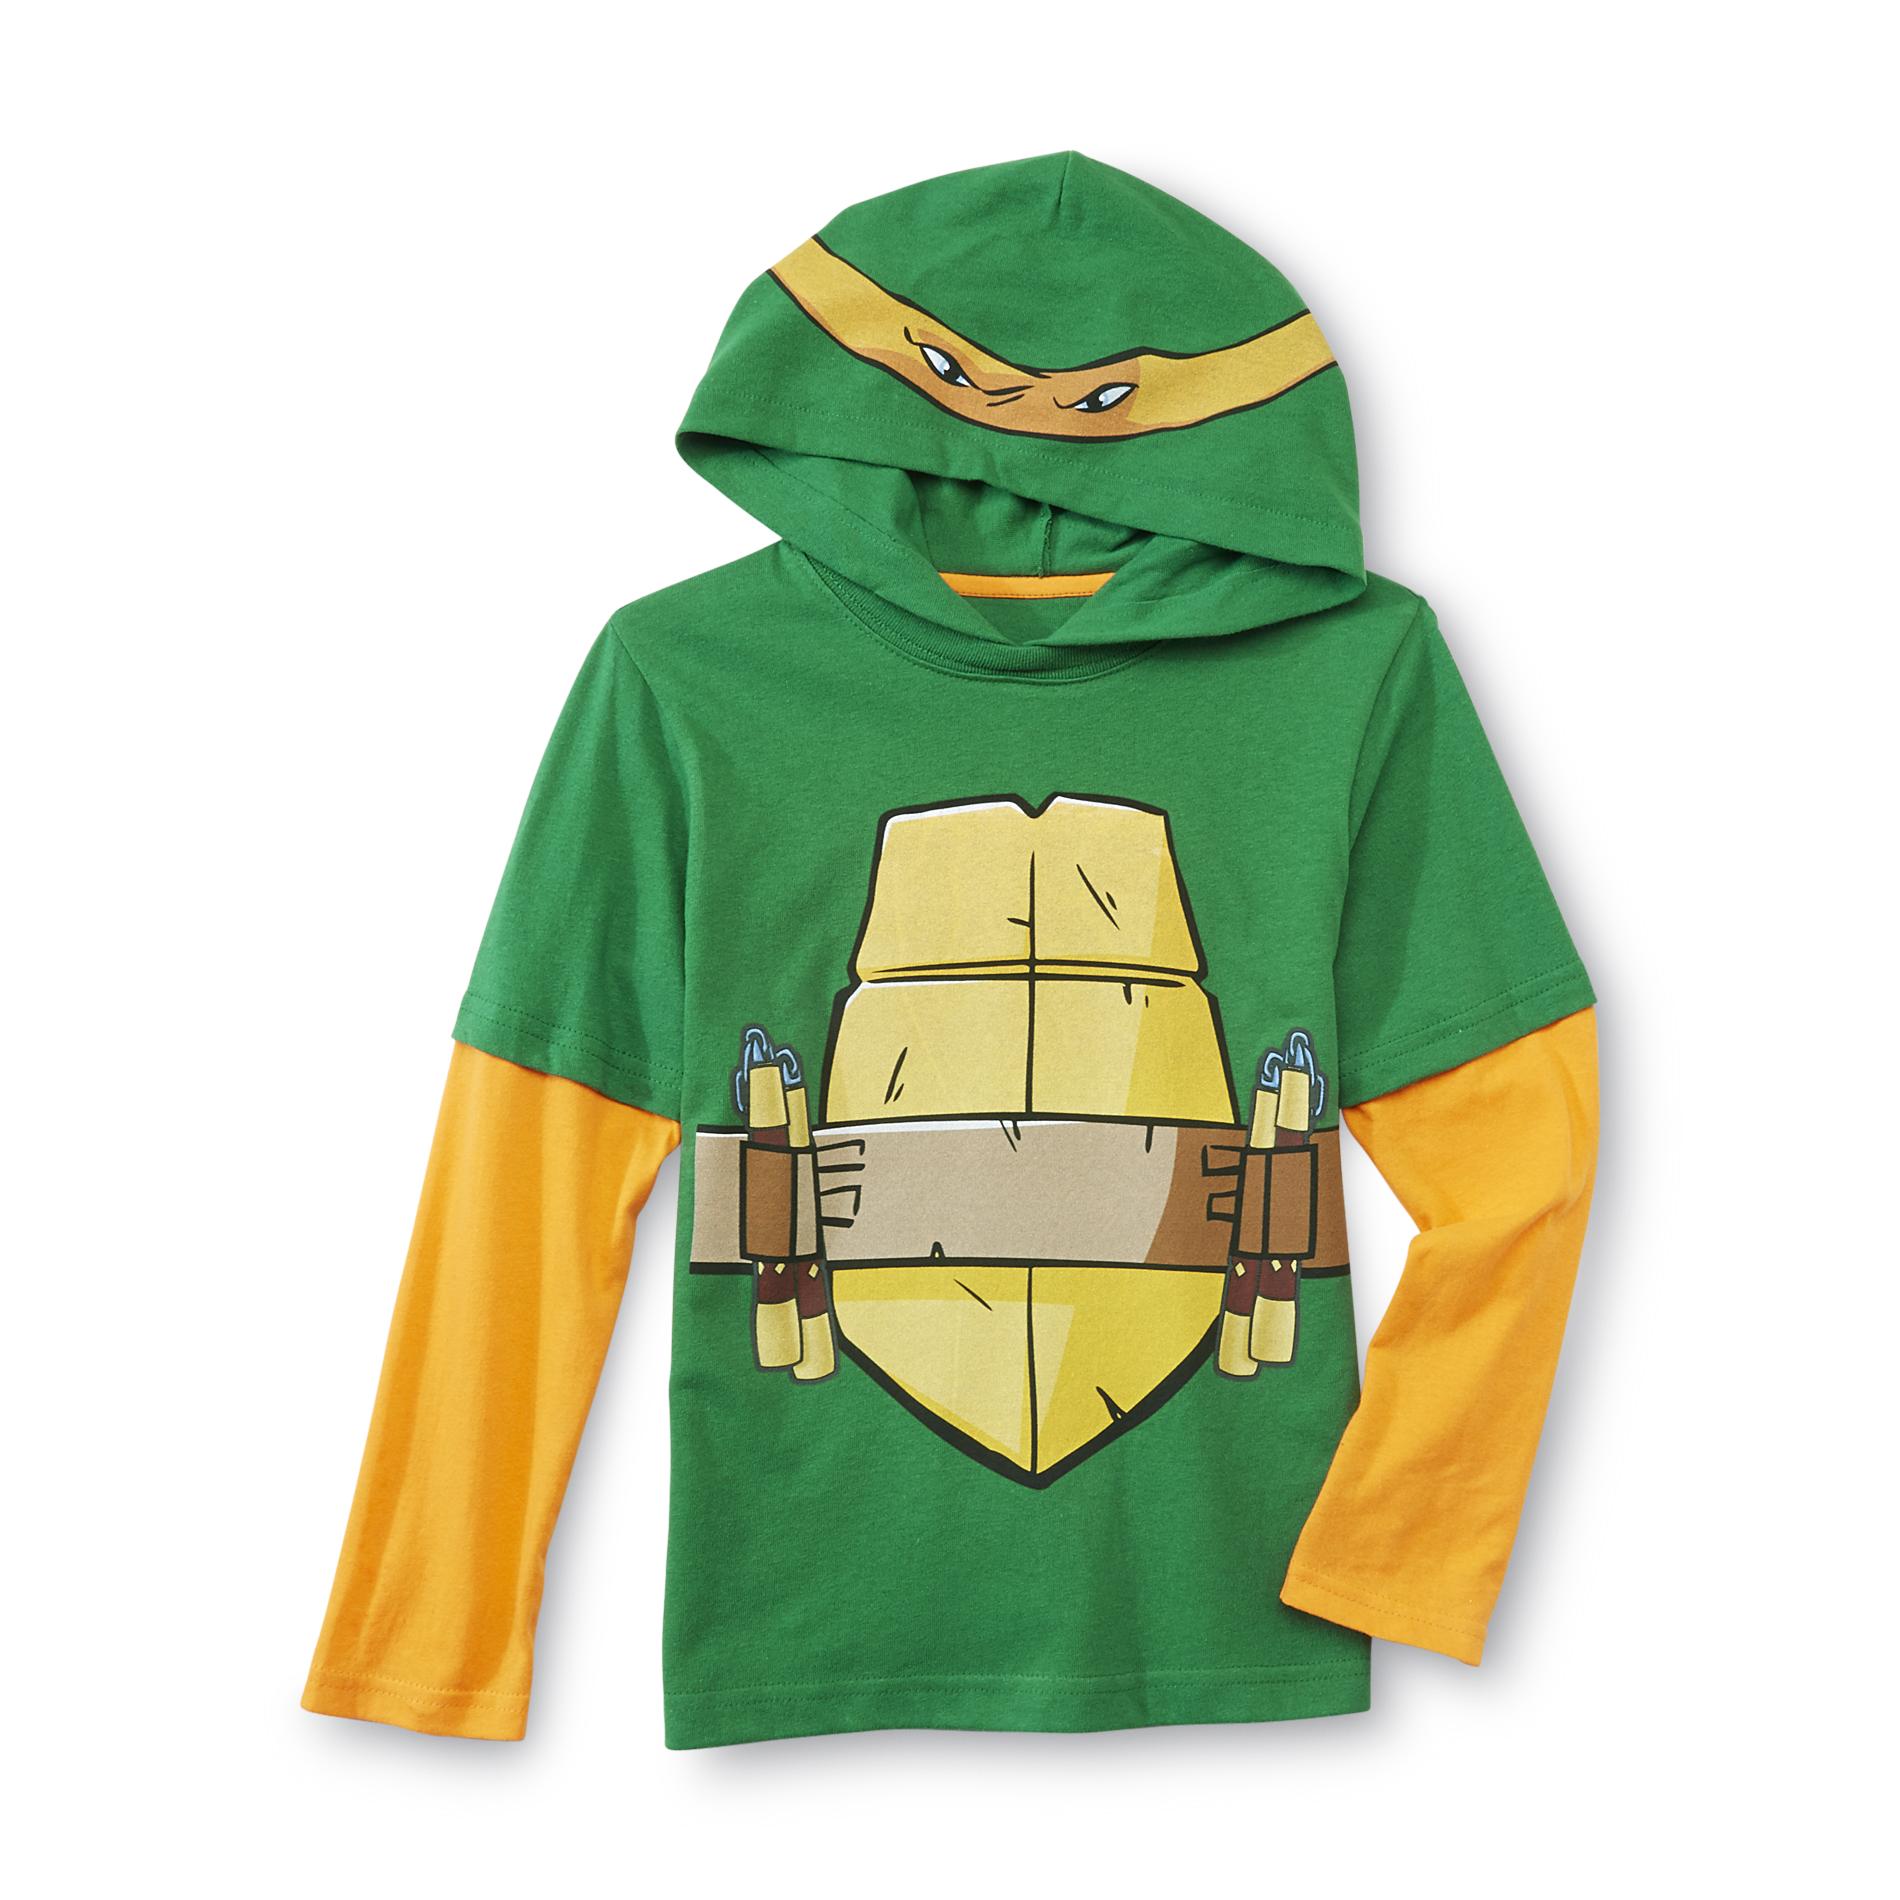 Nickelodeon Teenage Mutants Ninja Turtles Boy's Hooded Costume T-Shirt - Michelangelo